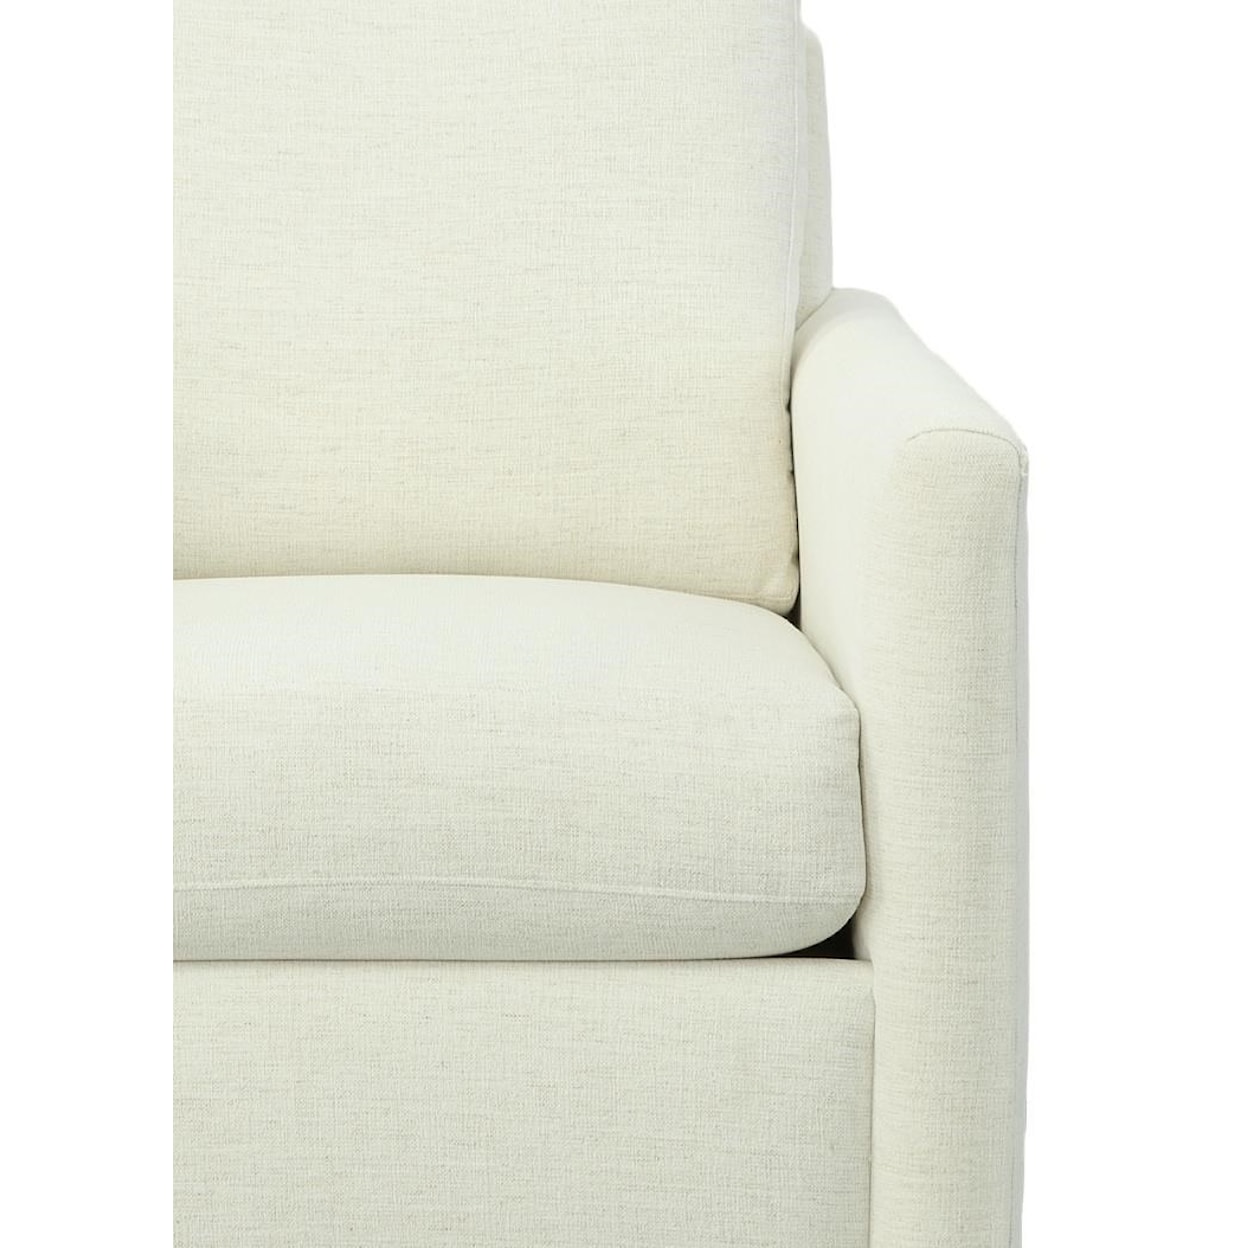 Stone & Leigh Furniture Savannah Upholstered Chair